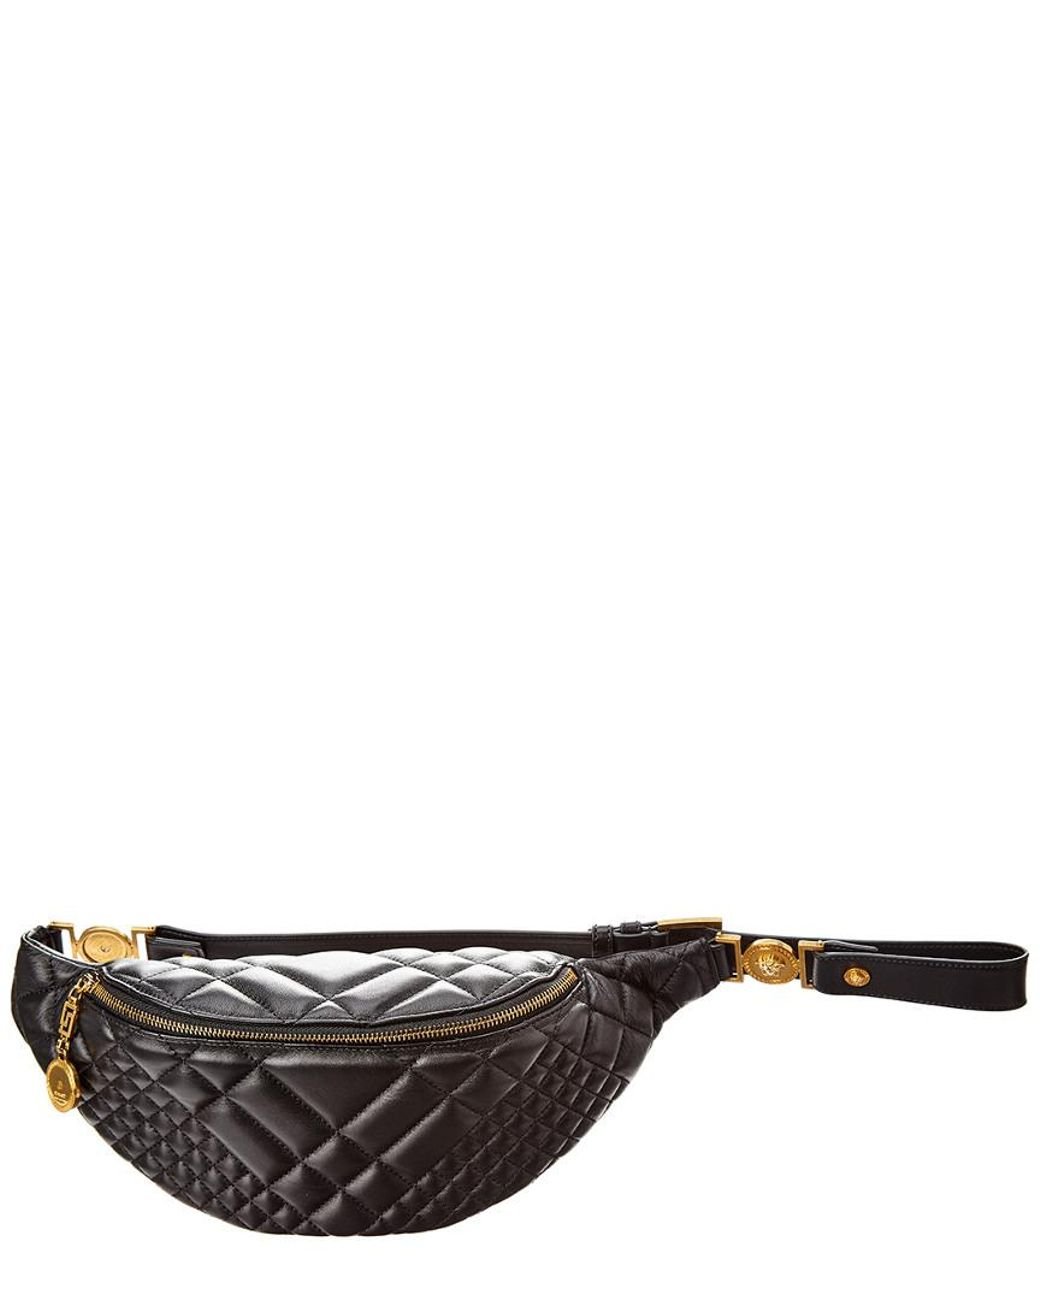 Versace Medusa Quilted Leather Belt Bag in Black | Lyst Australia